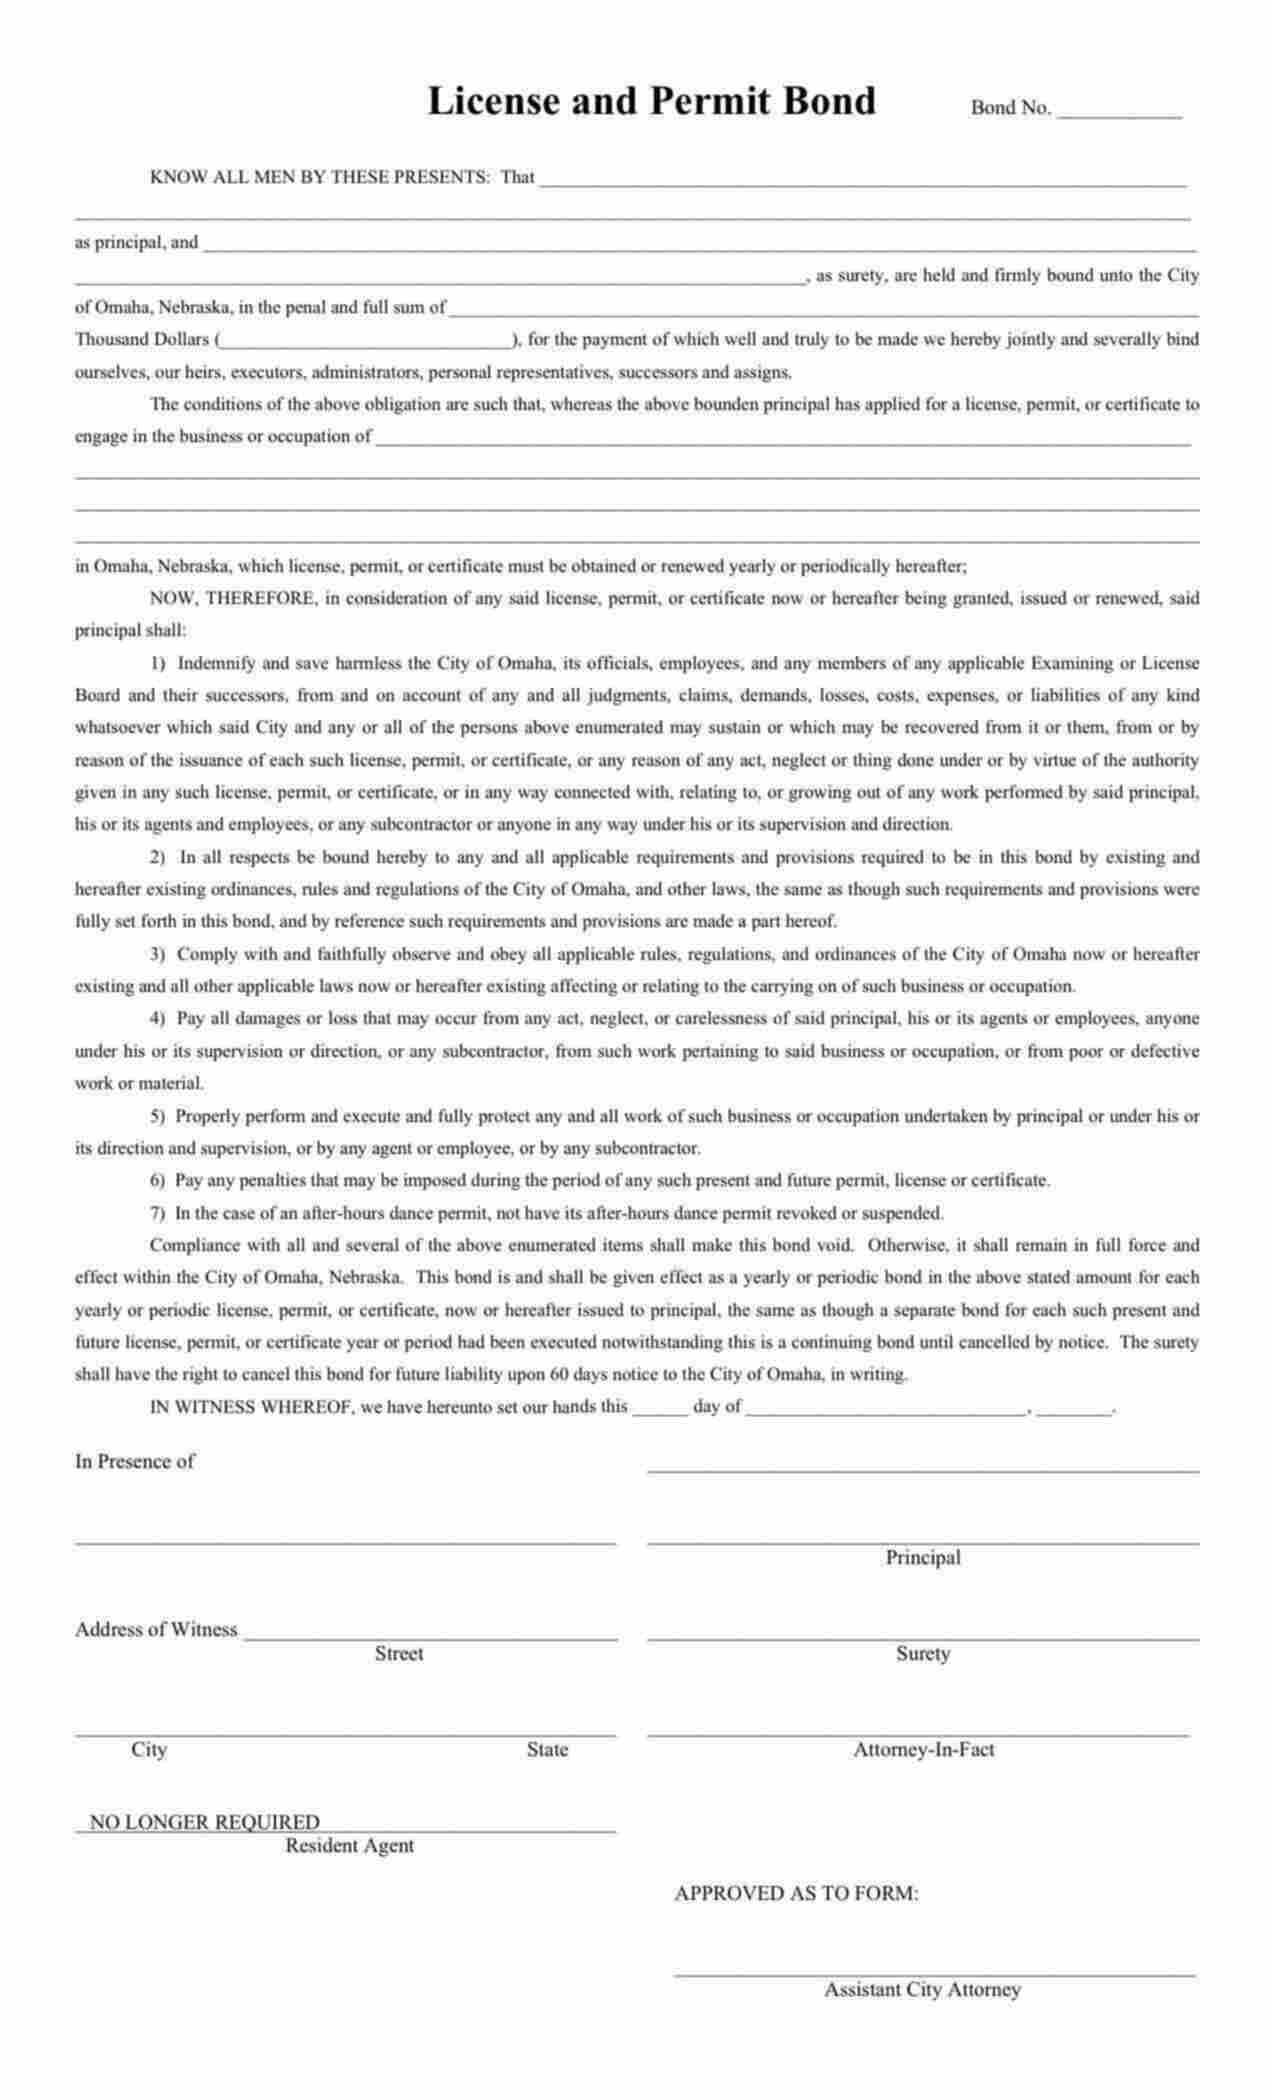 Nebraska License and Permit Bond Form